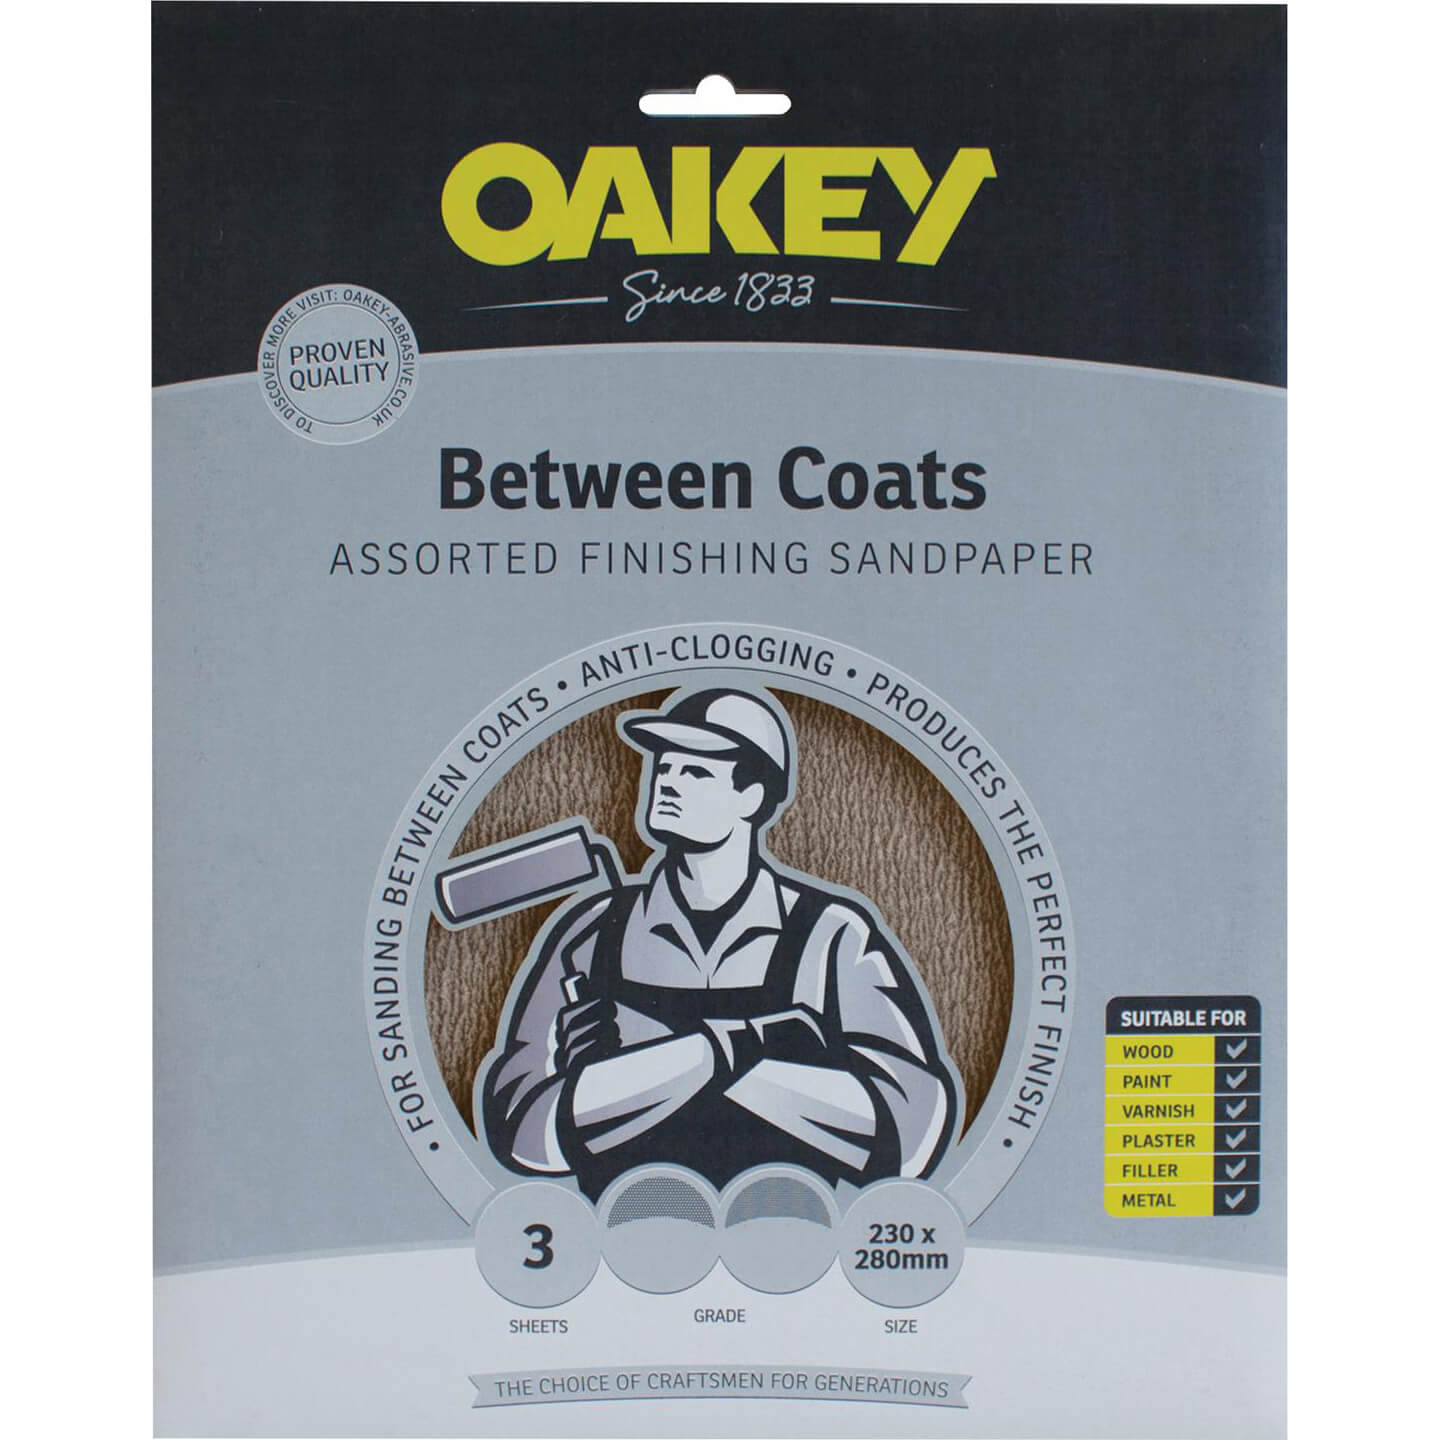 Oakey Between Coats Sandpaper Fine Sheets 58625 Pack of 3